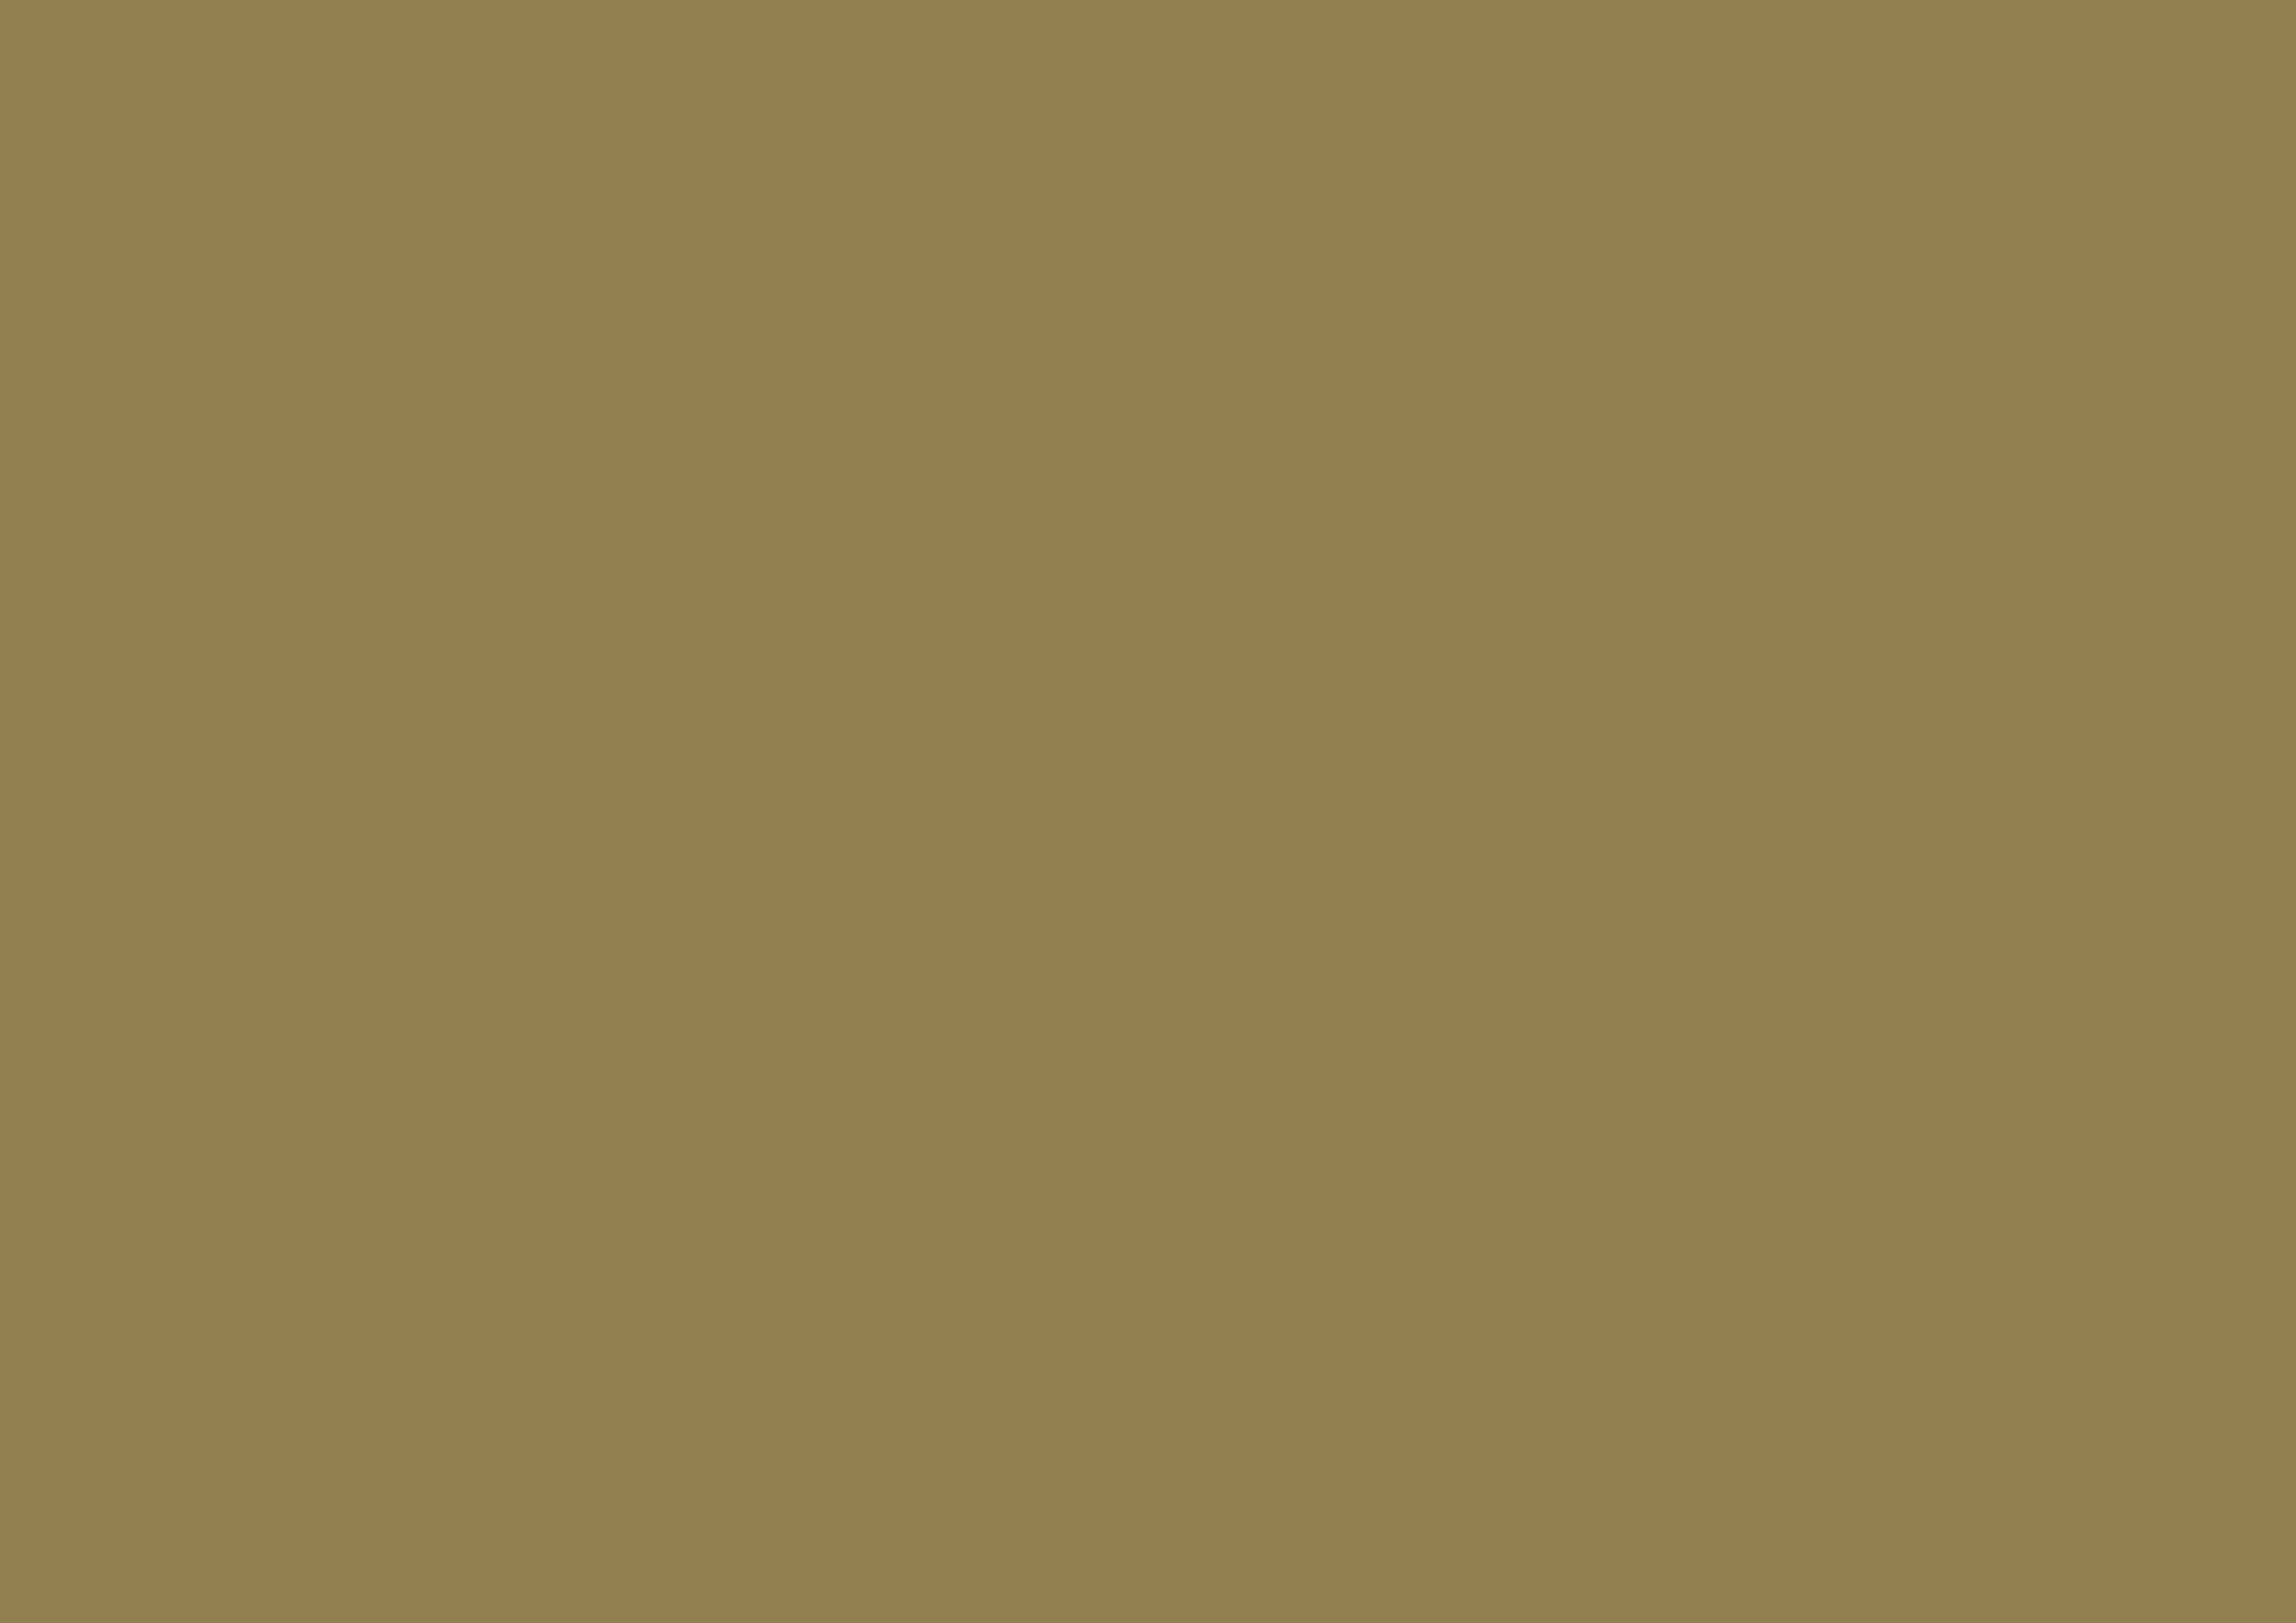 3508x2480 Dark Tan Solid Color Background